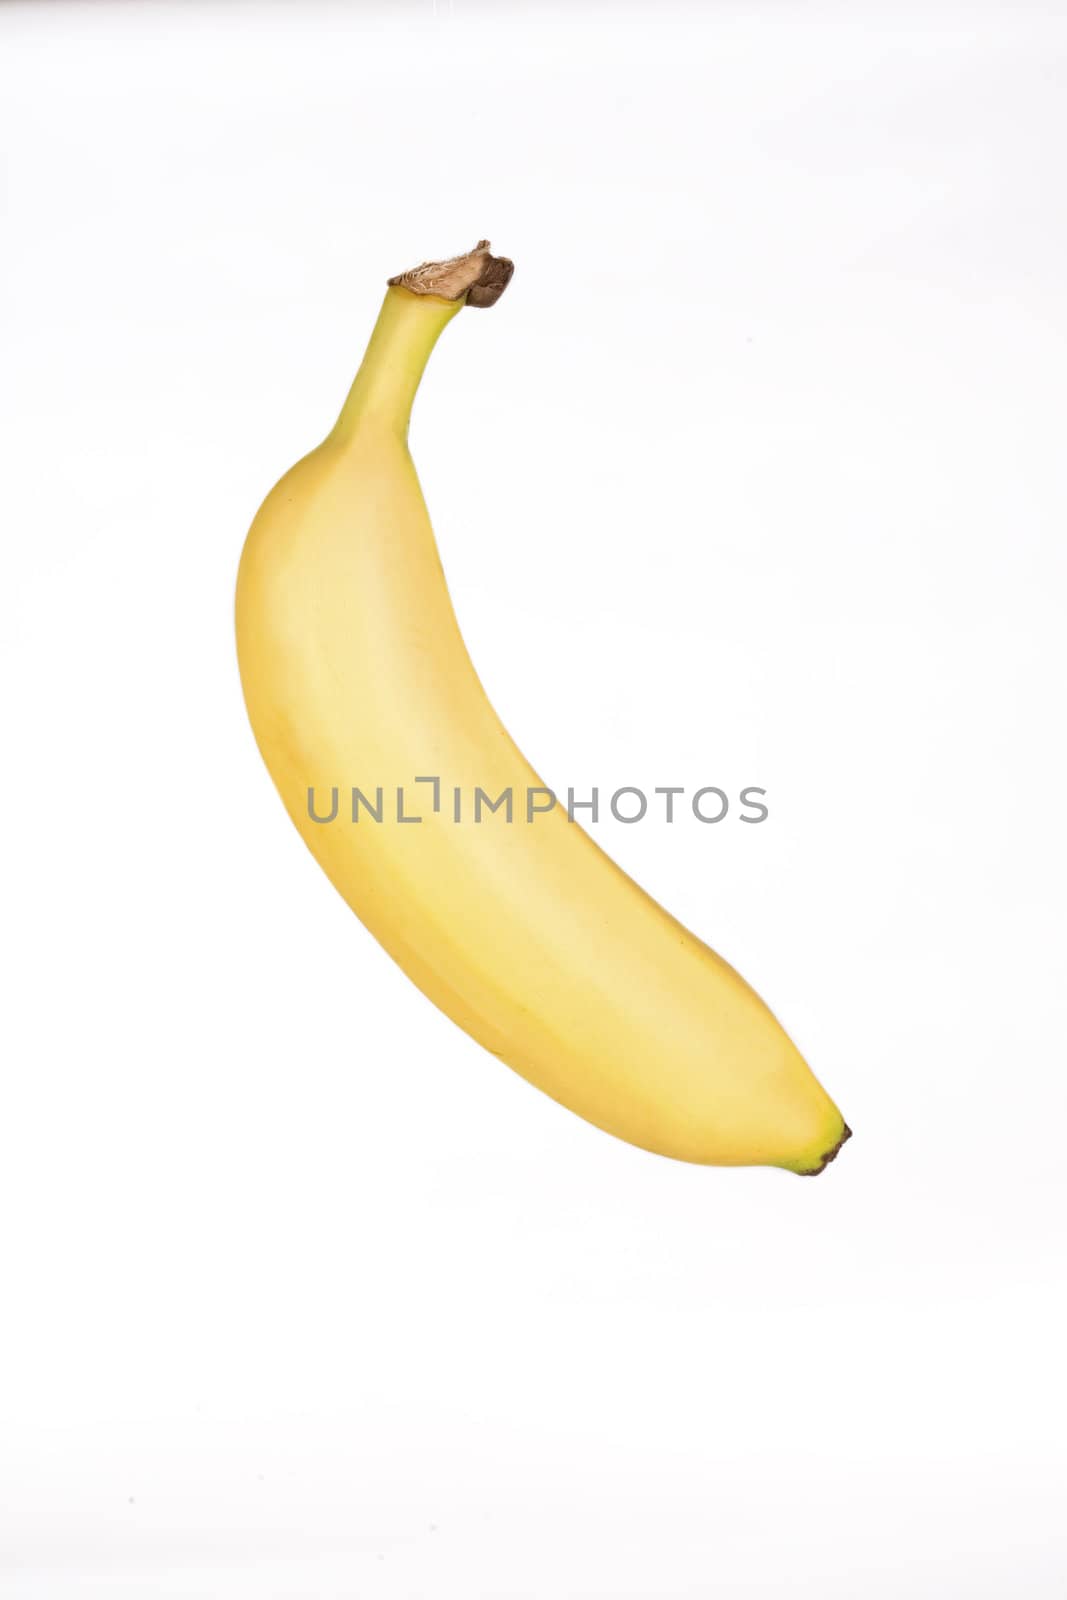 One ripe yellow banana isolated on white by jarenwicklund